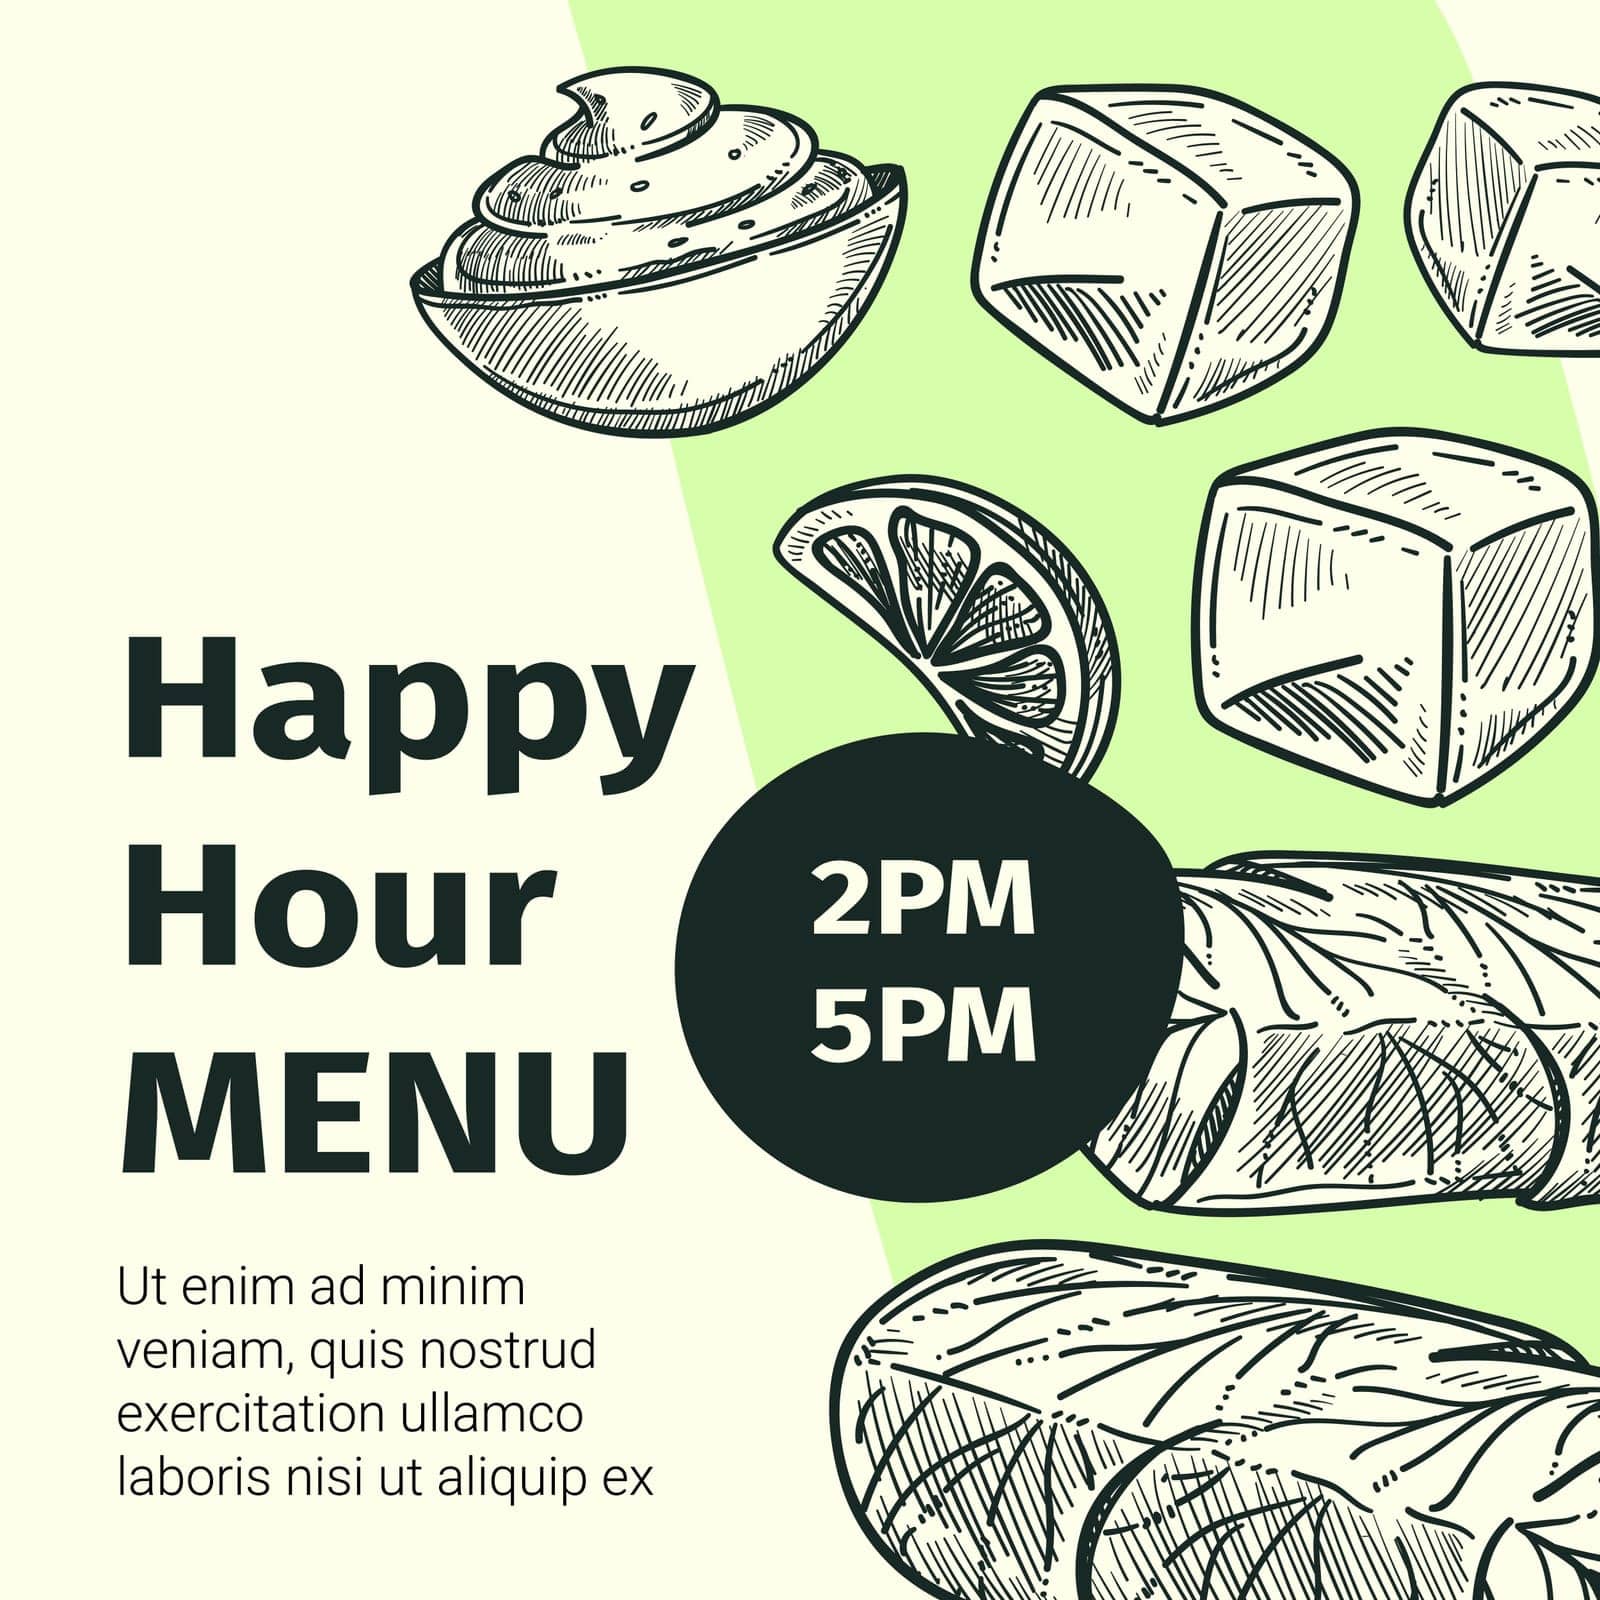 Happy hour menu in restaurant or cafe, banner by Sonulkaster